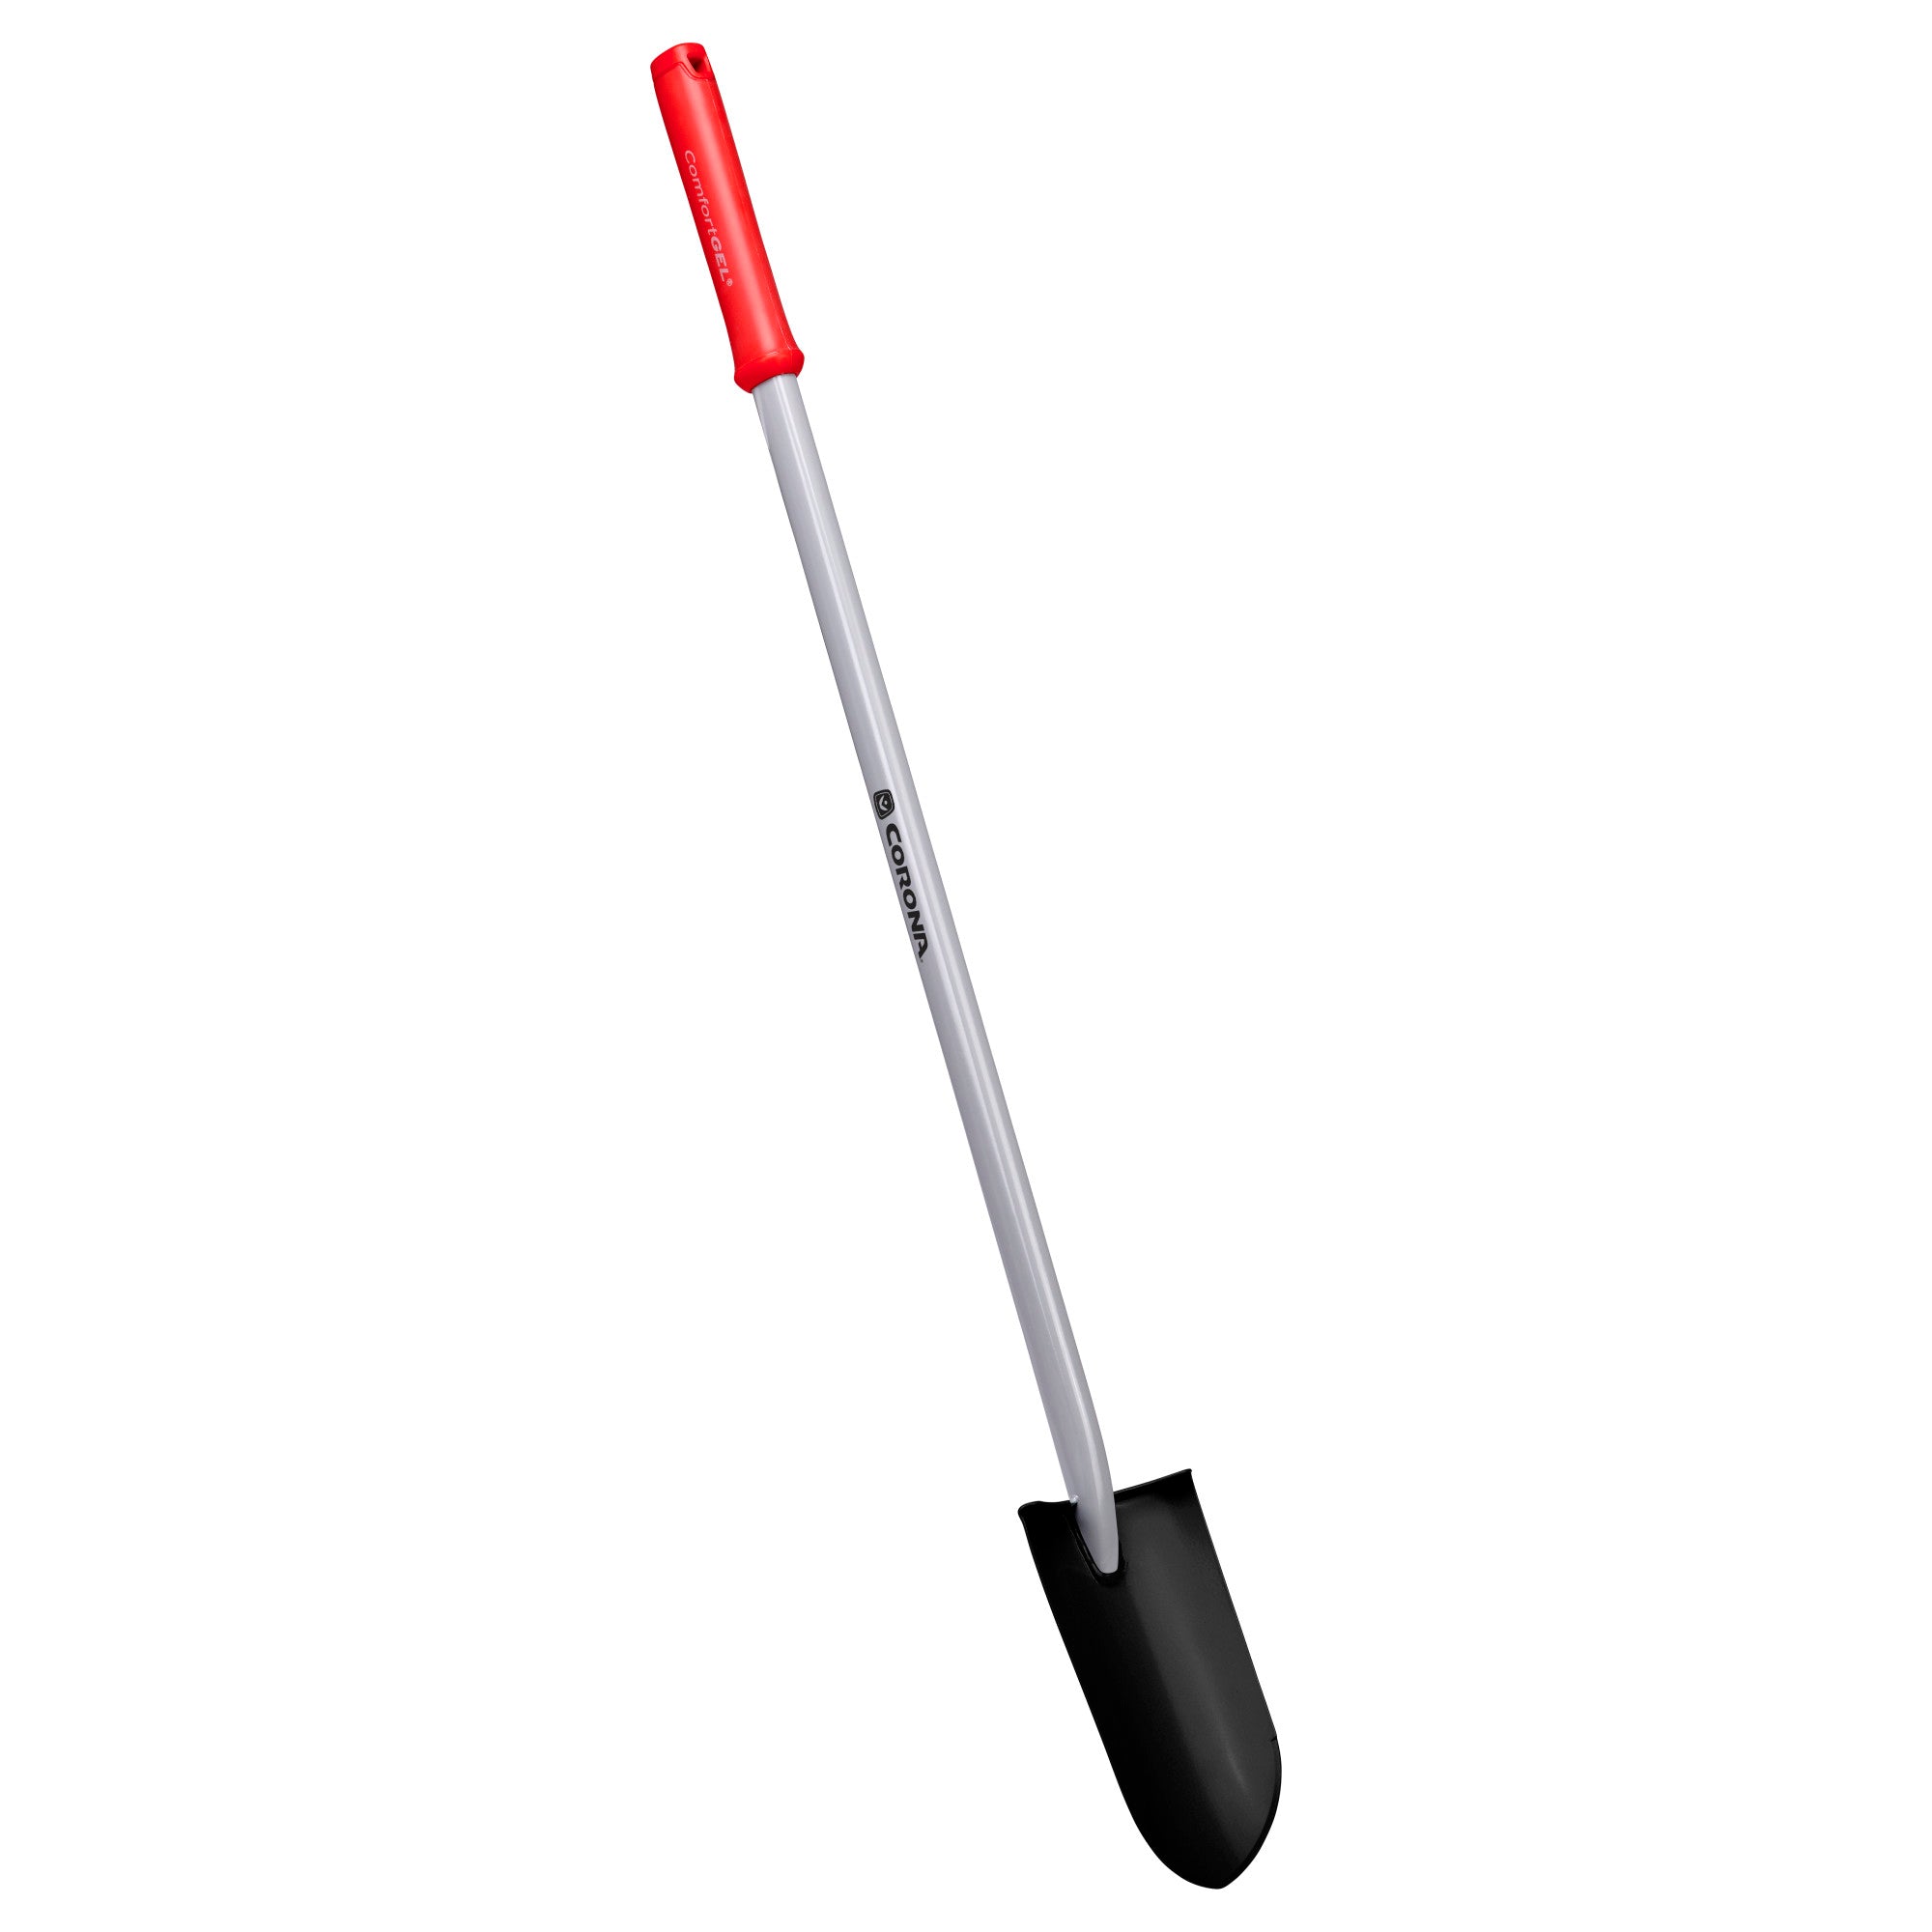 DigMASTER Nursery Shovel with ComfortGEL® Grip